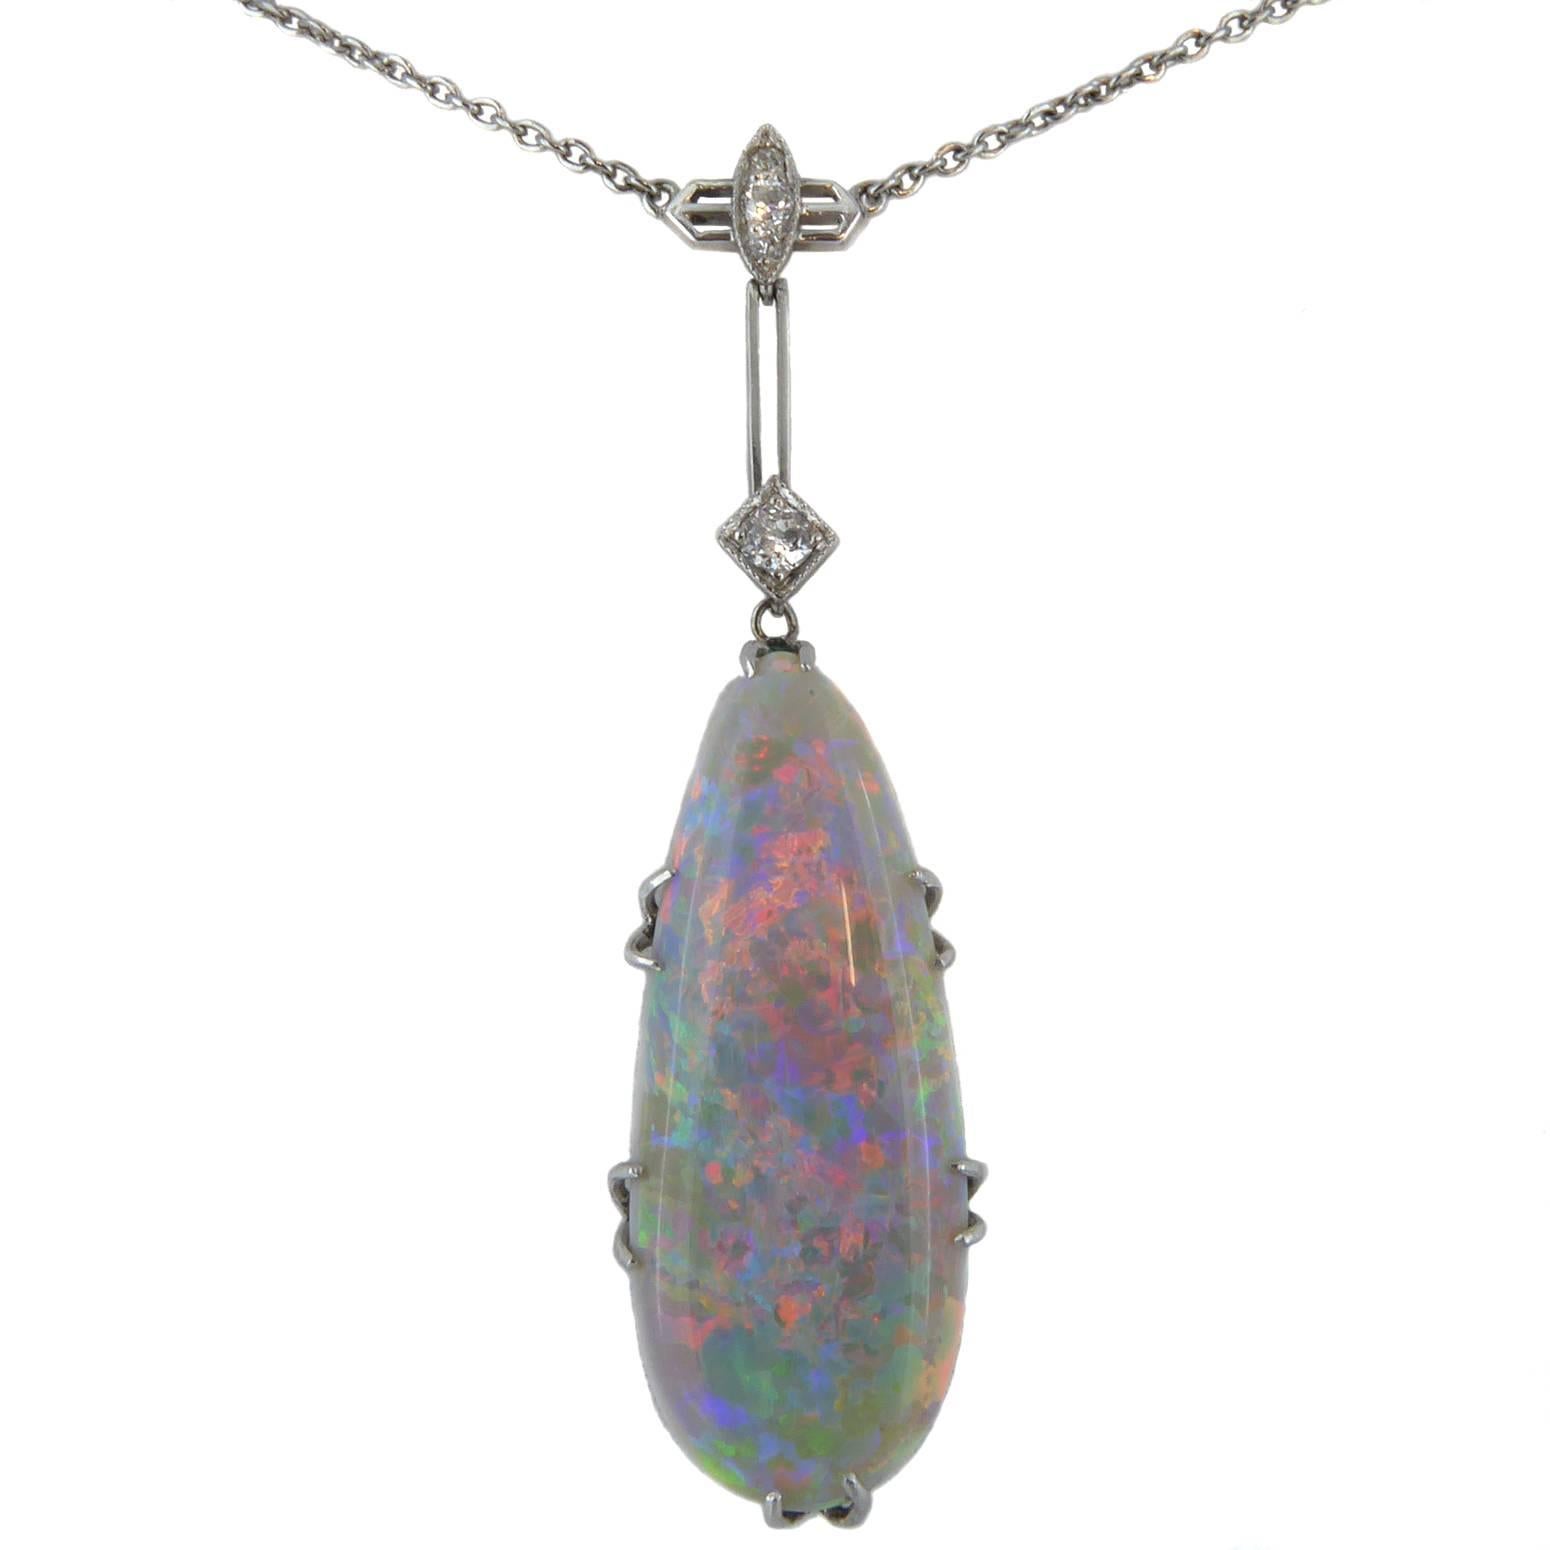 Edwardian Vintage Opal Necklace, 6.64 Carat, Diamond Set Mount, circa 1910